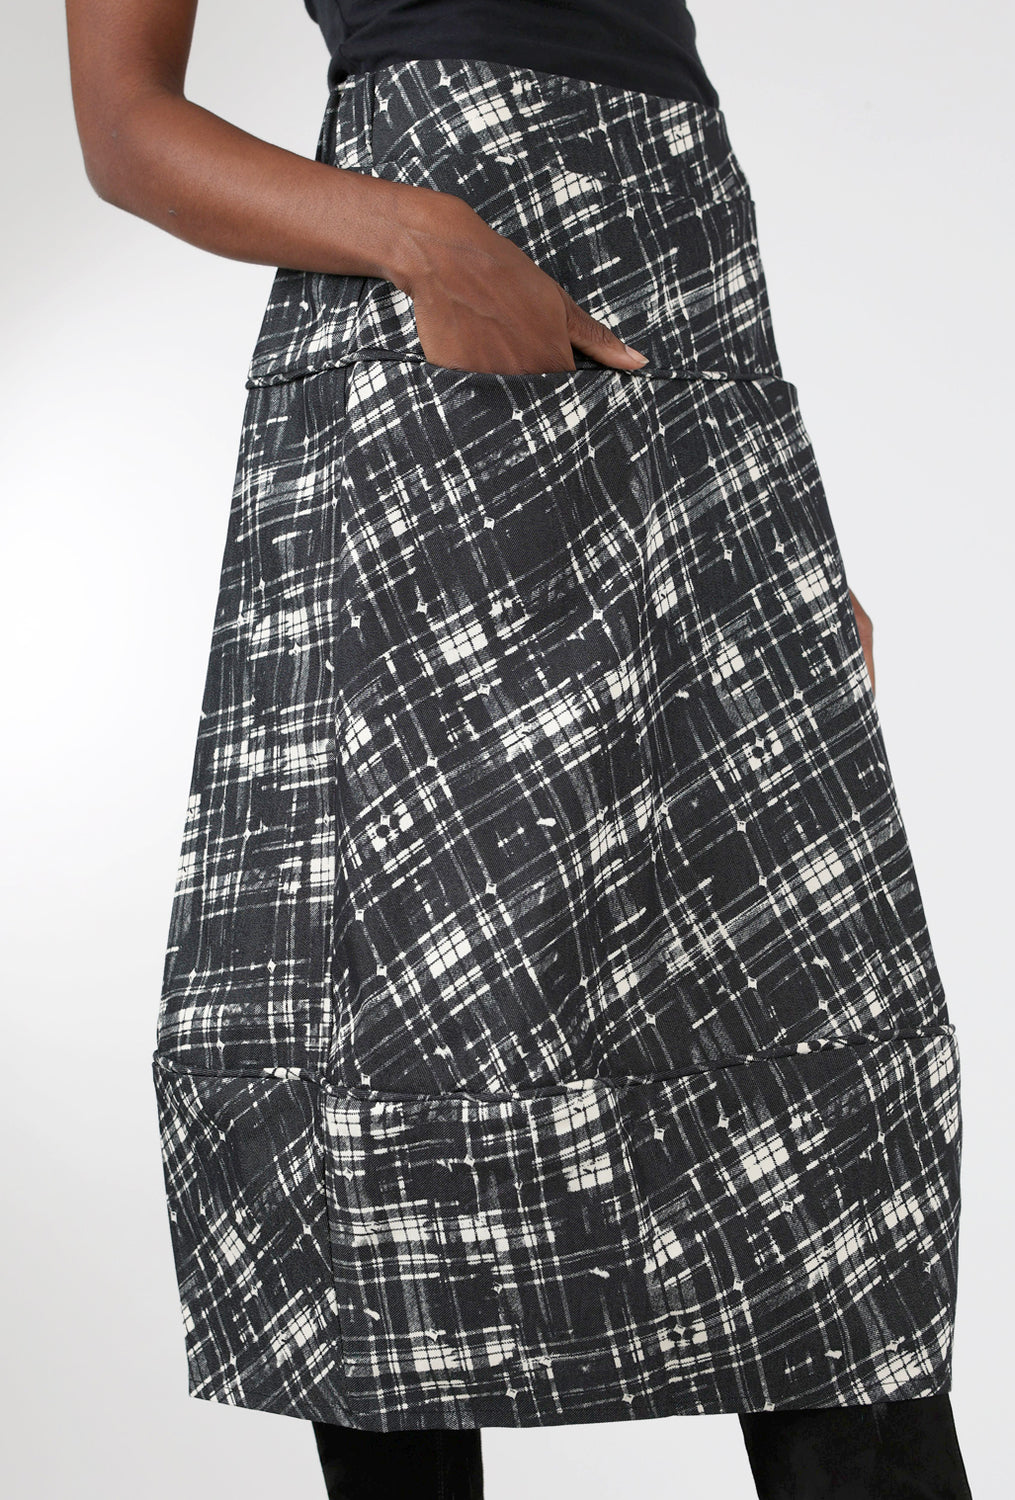 Ozai Plaid Bubble Skirt, Black/Ecru 